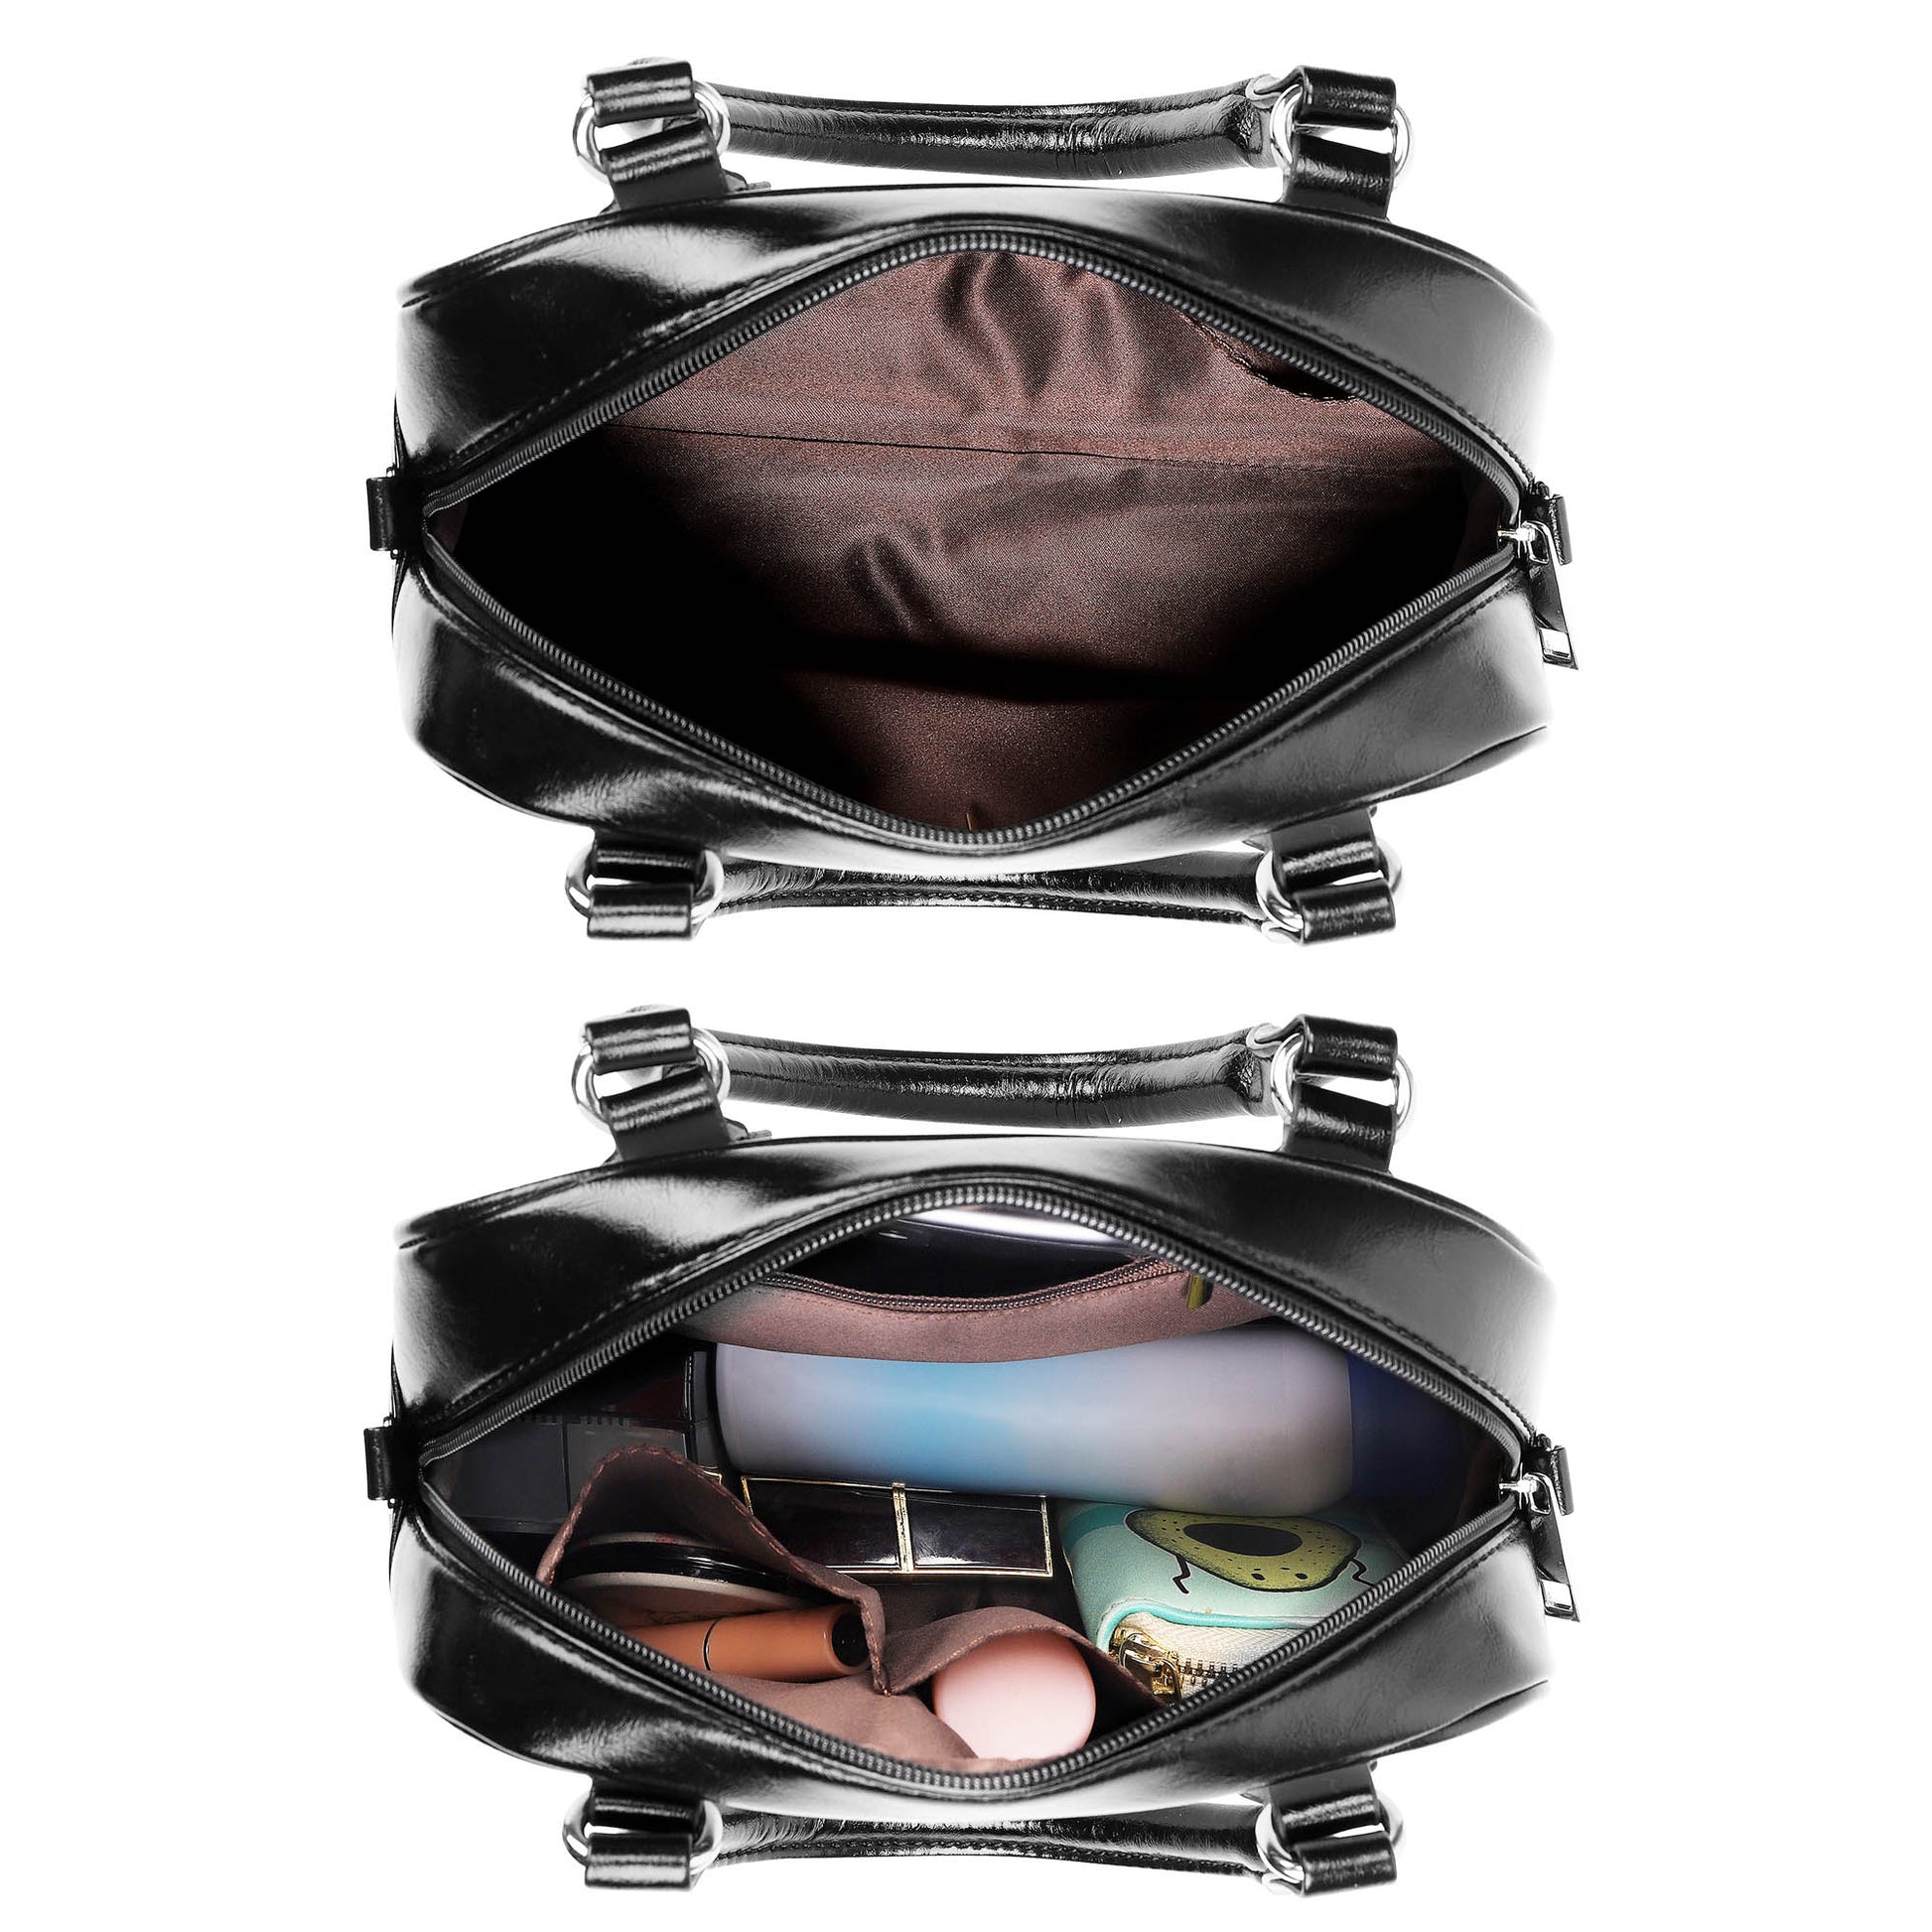 Watson Ancient Tartan Shoulder Handbags with Family Crest - Tartanvibesclothing